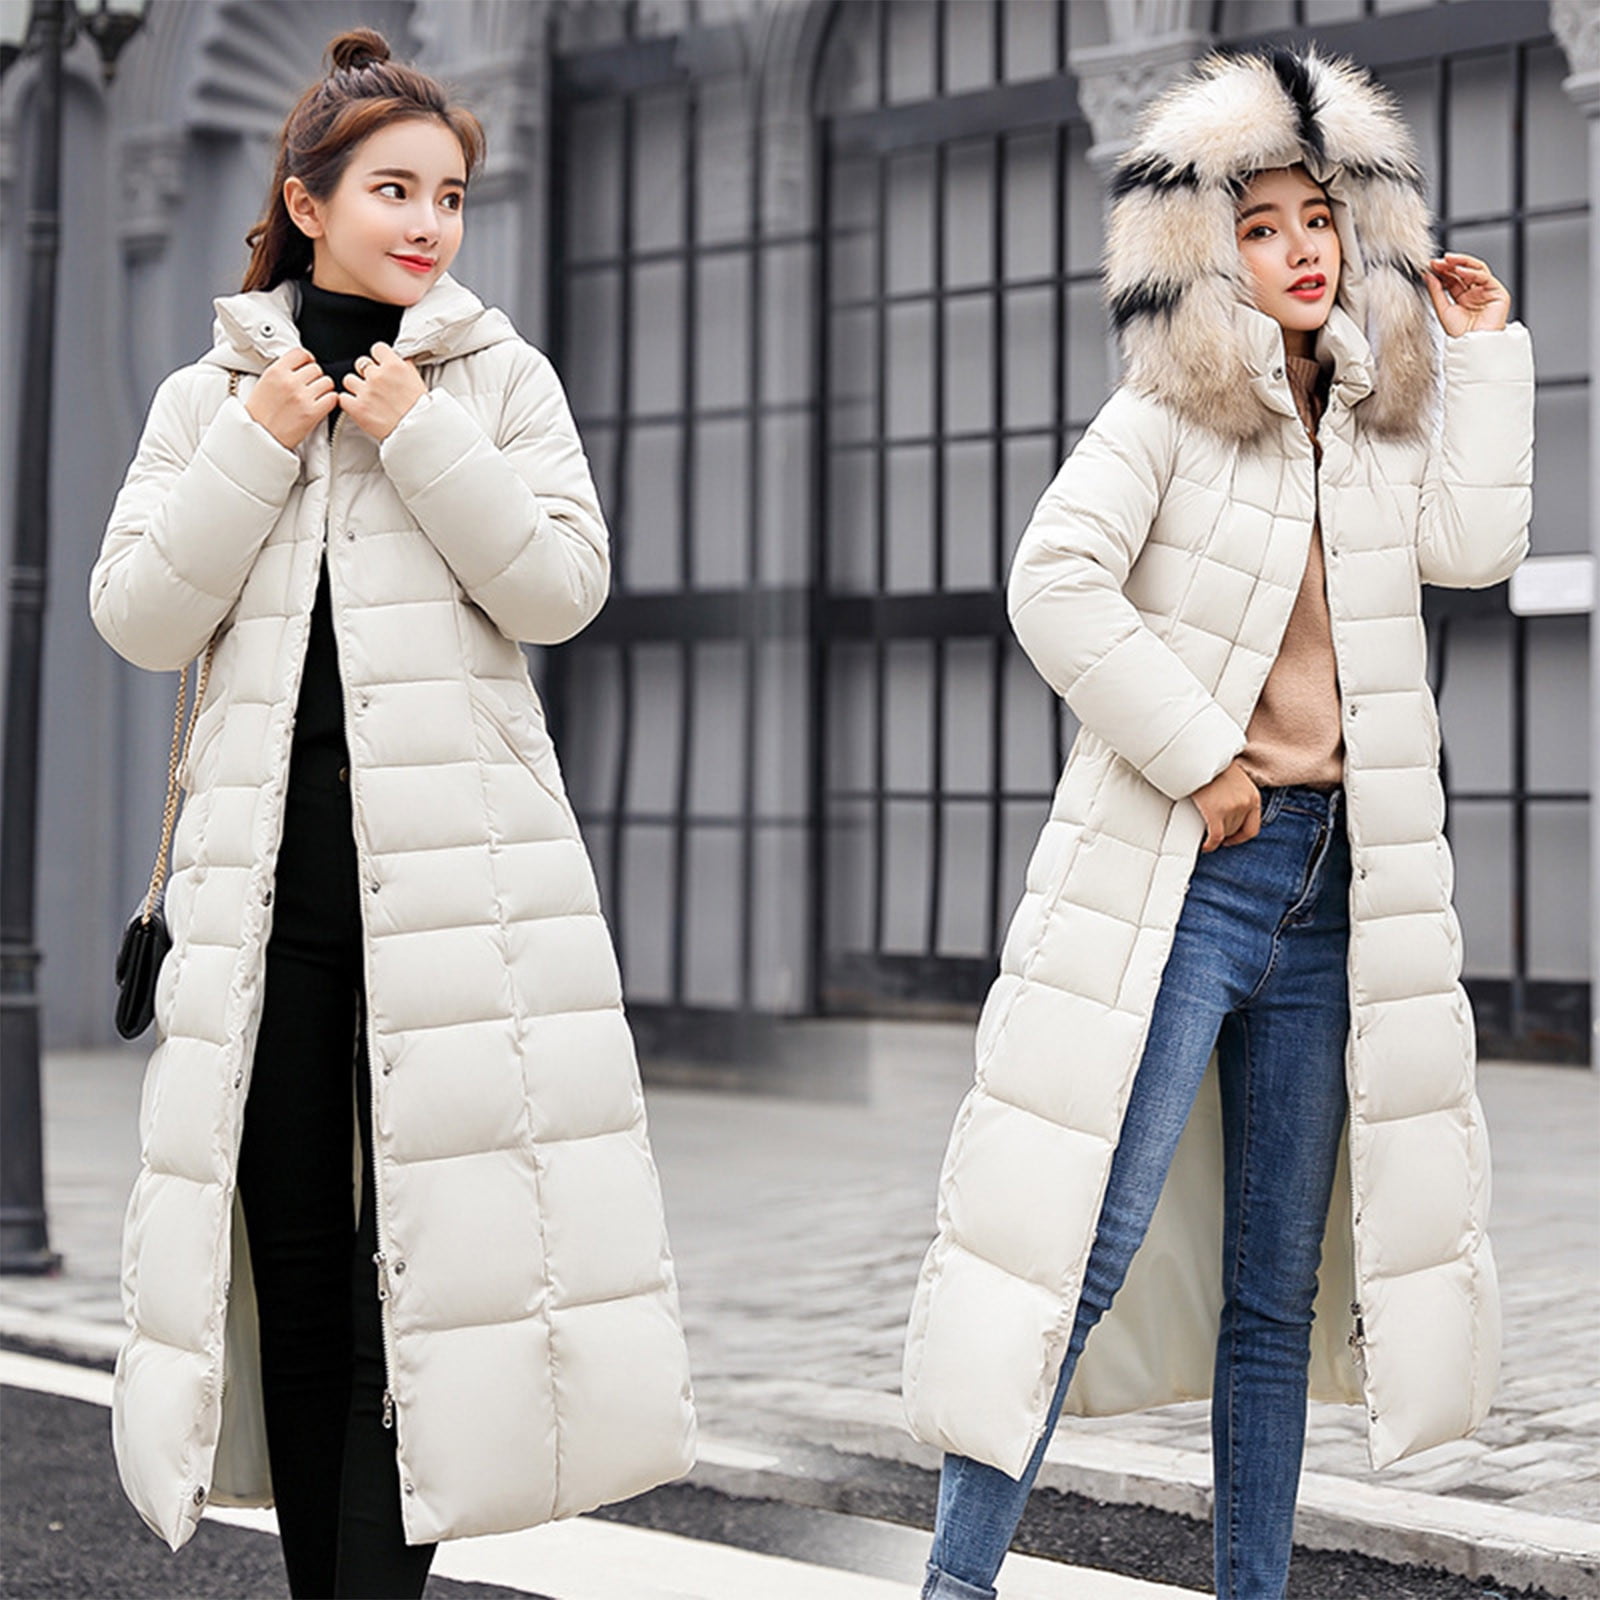 Brnmxoke Online Shopping, Fur Jackets For Women Winter Thicken